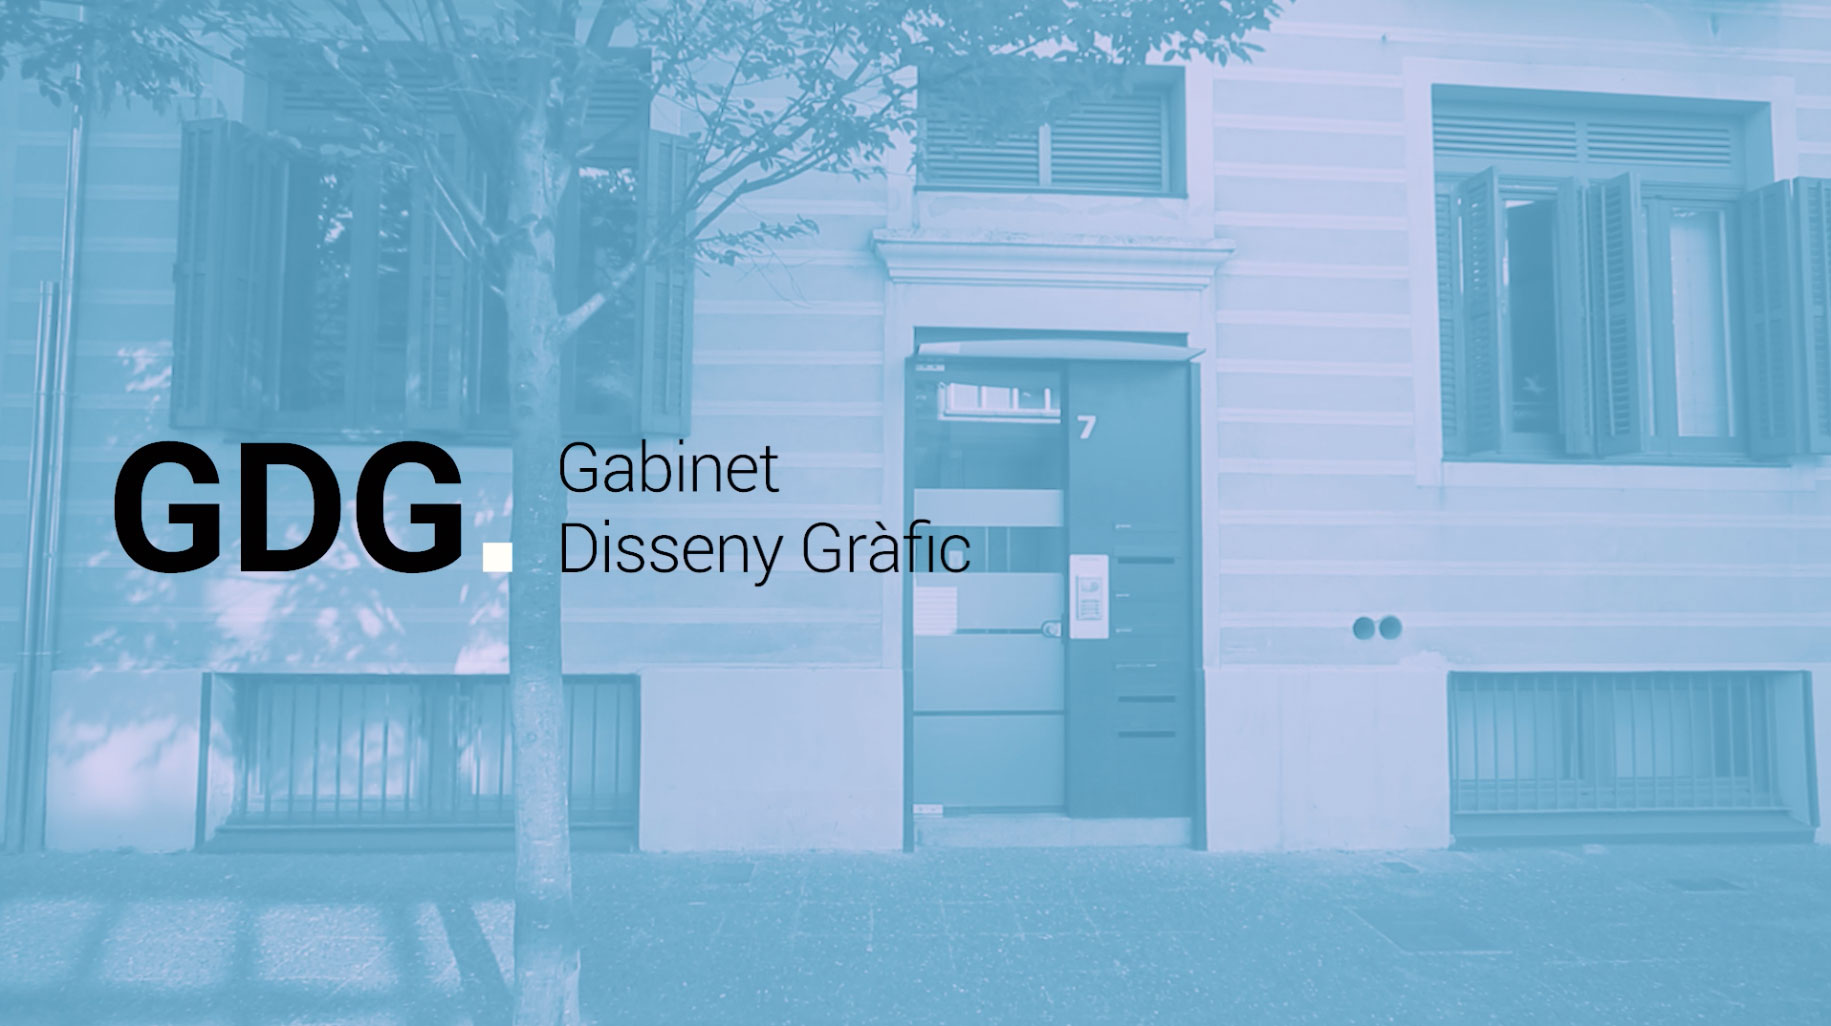 GDG Gabinet de disseny gràfic a Girona